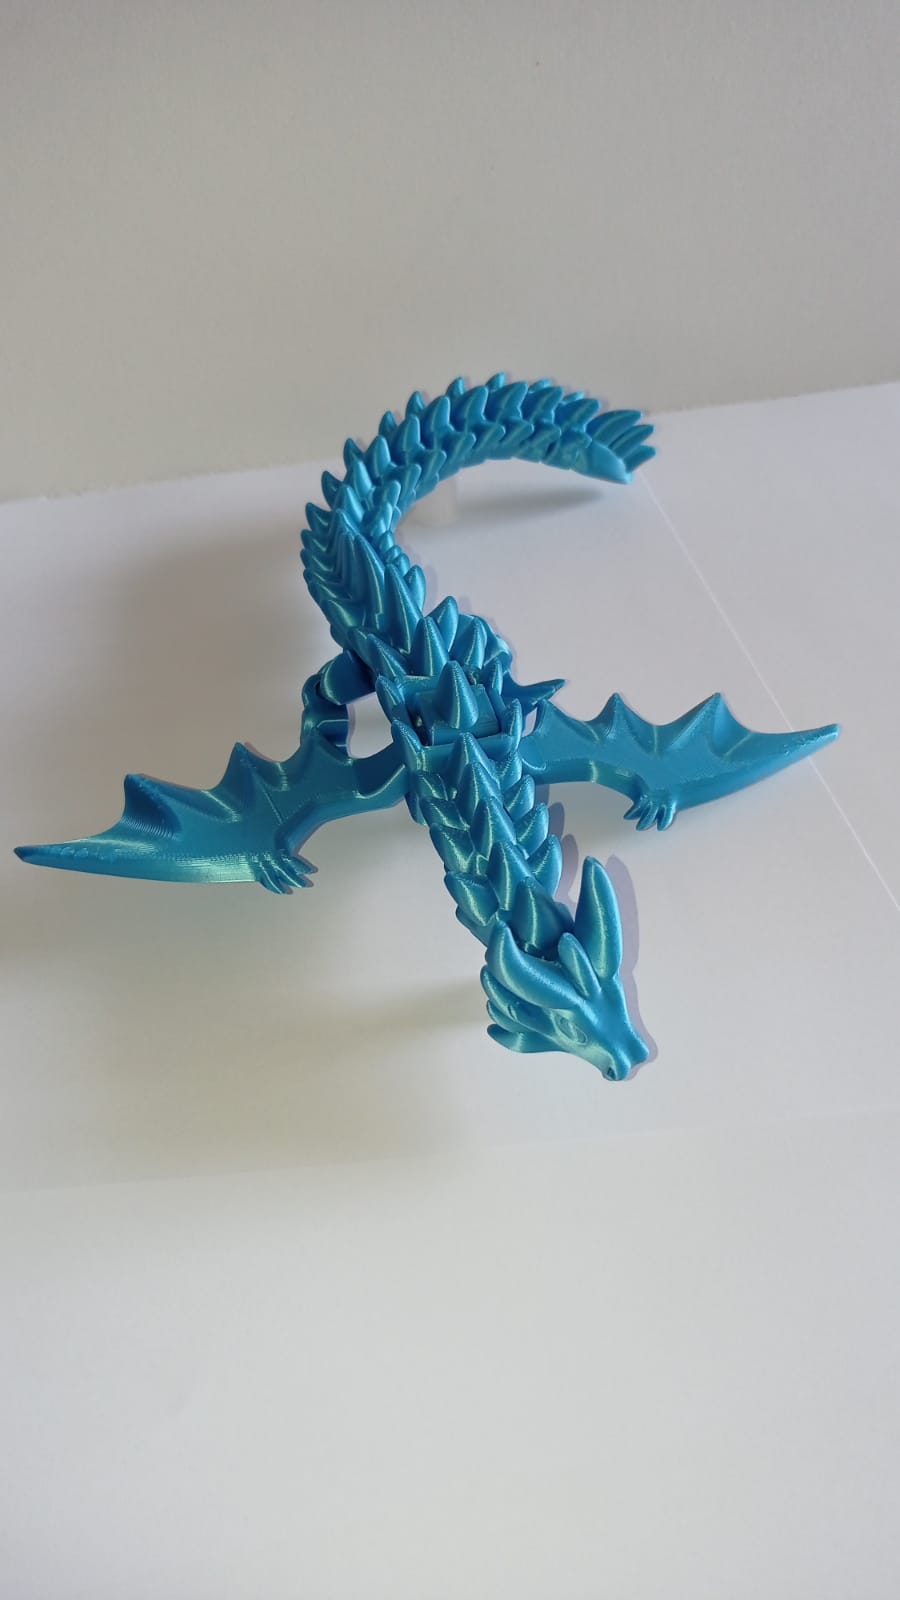 Flexi Wing Dragon